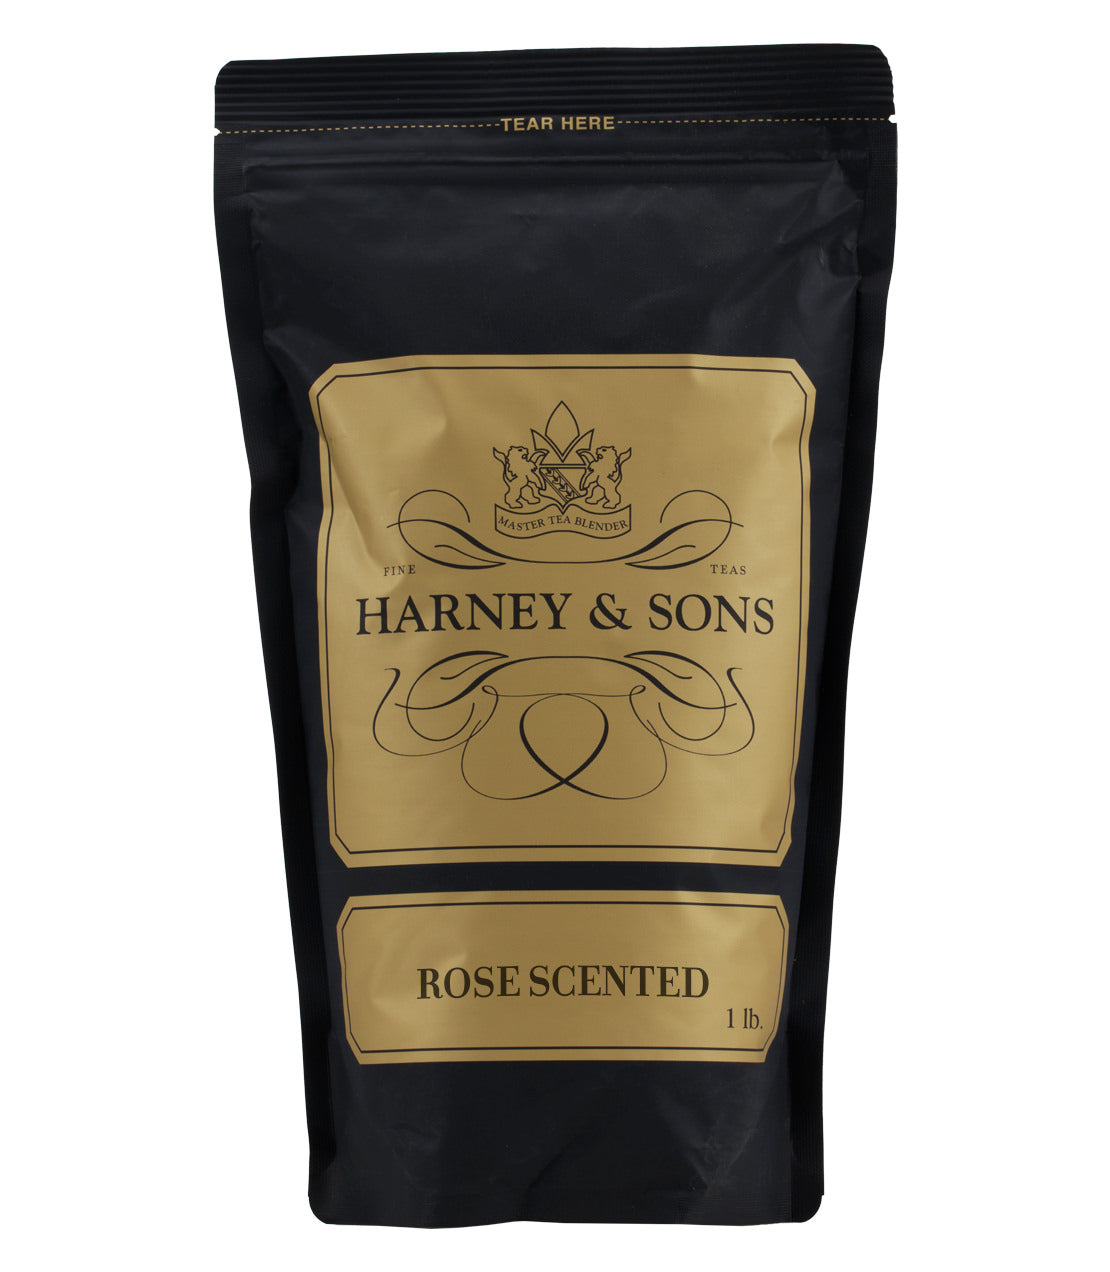 Rose Scented - Loose 1 lb. Bag - Harney & Sons Fine Teas